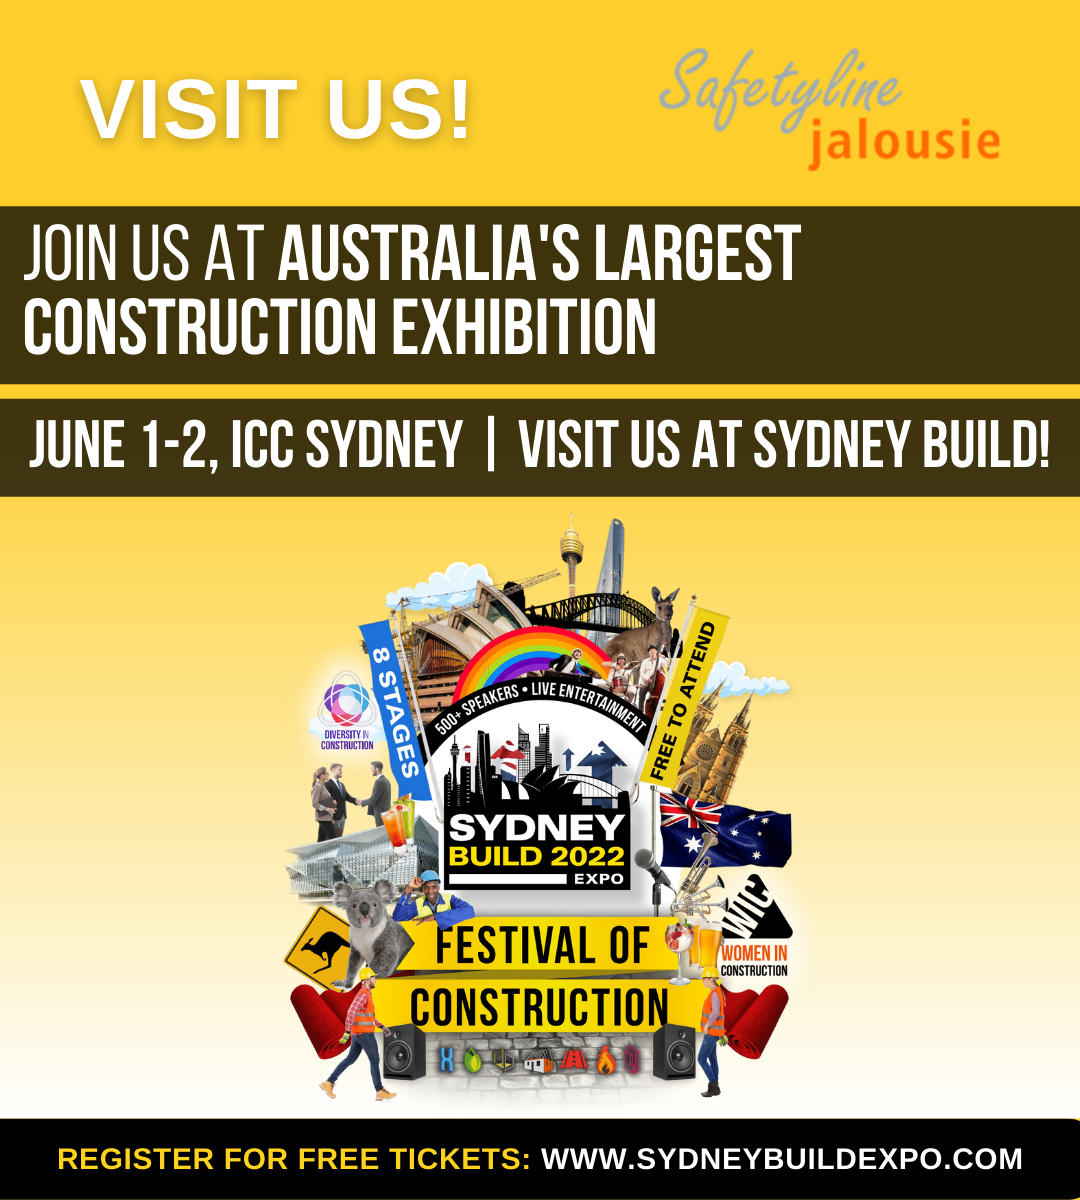 Safetyline Jalousie - Sydney Build Expo